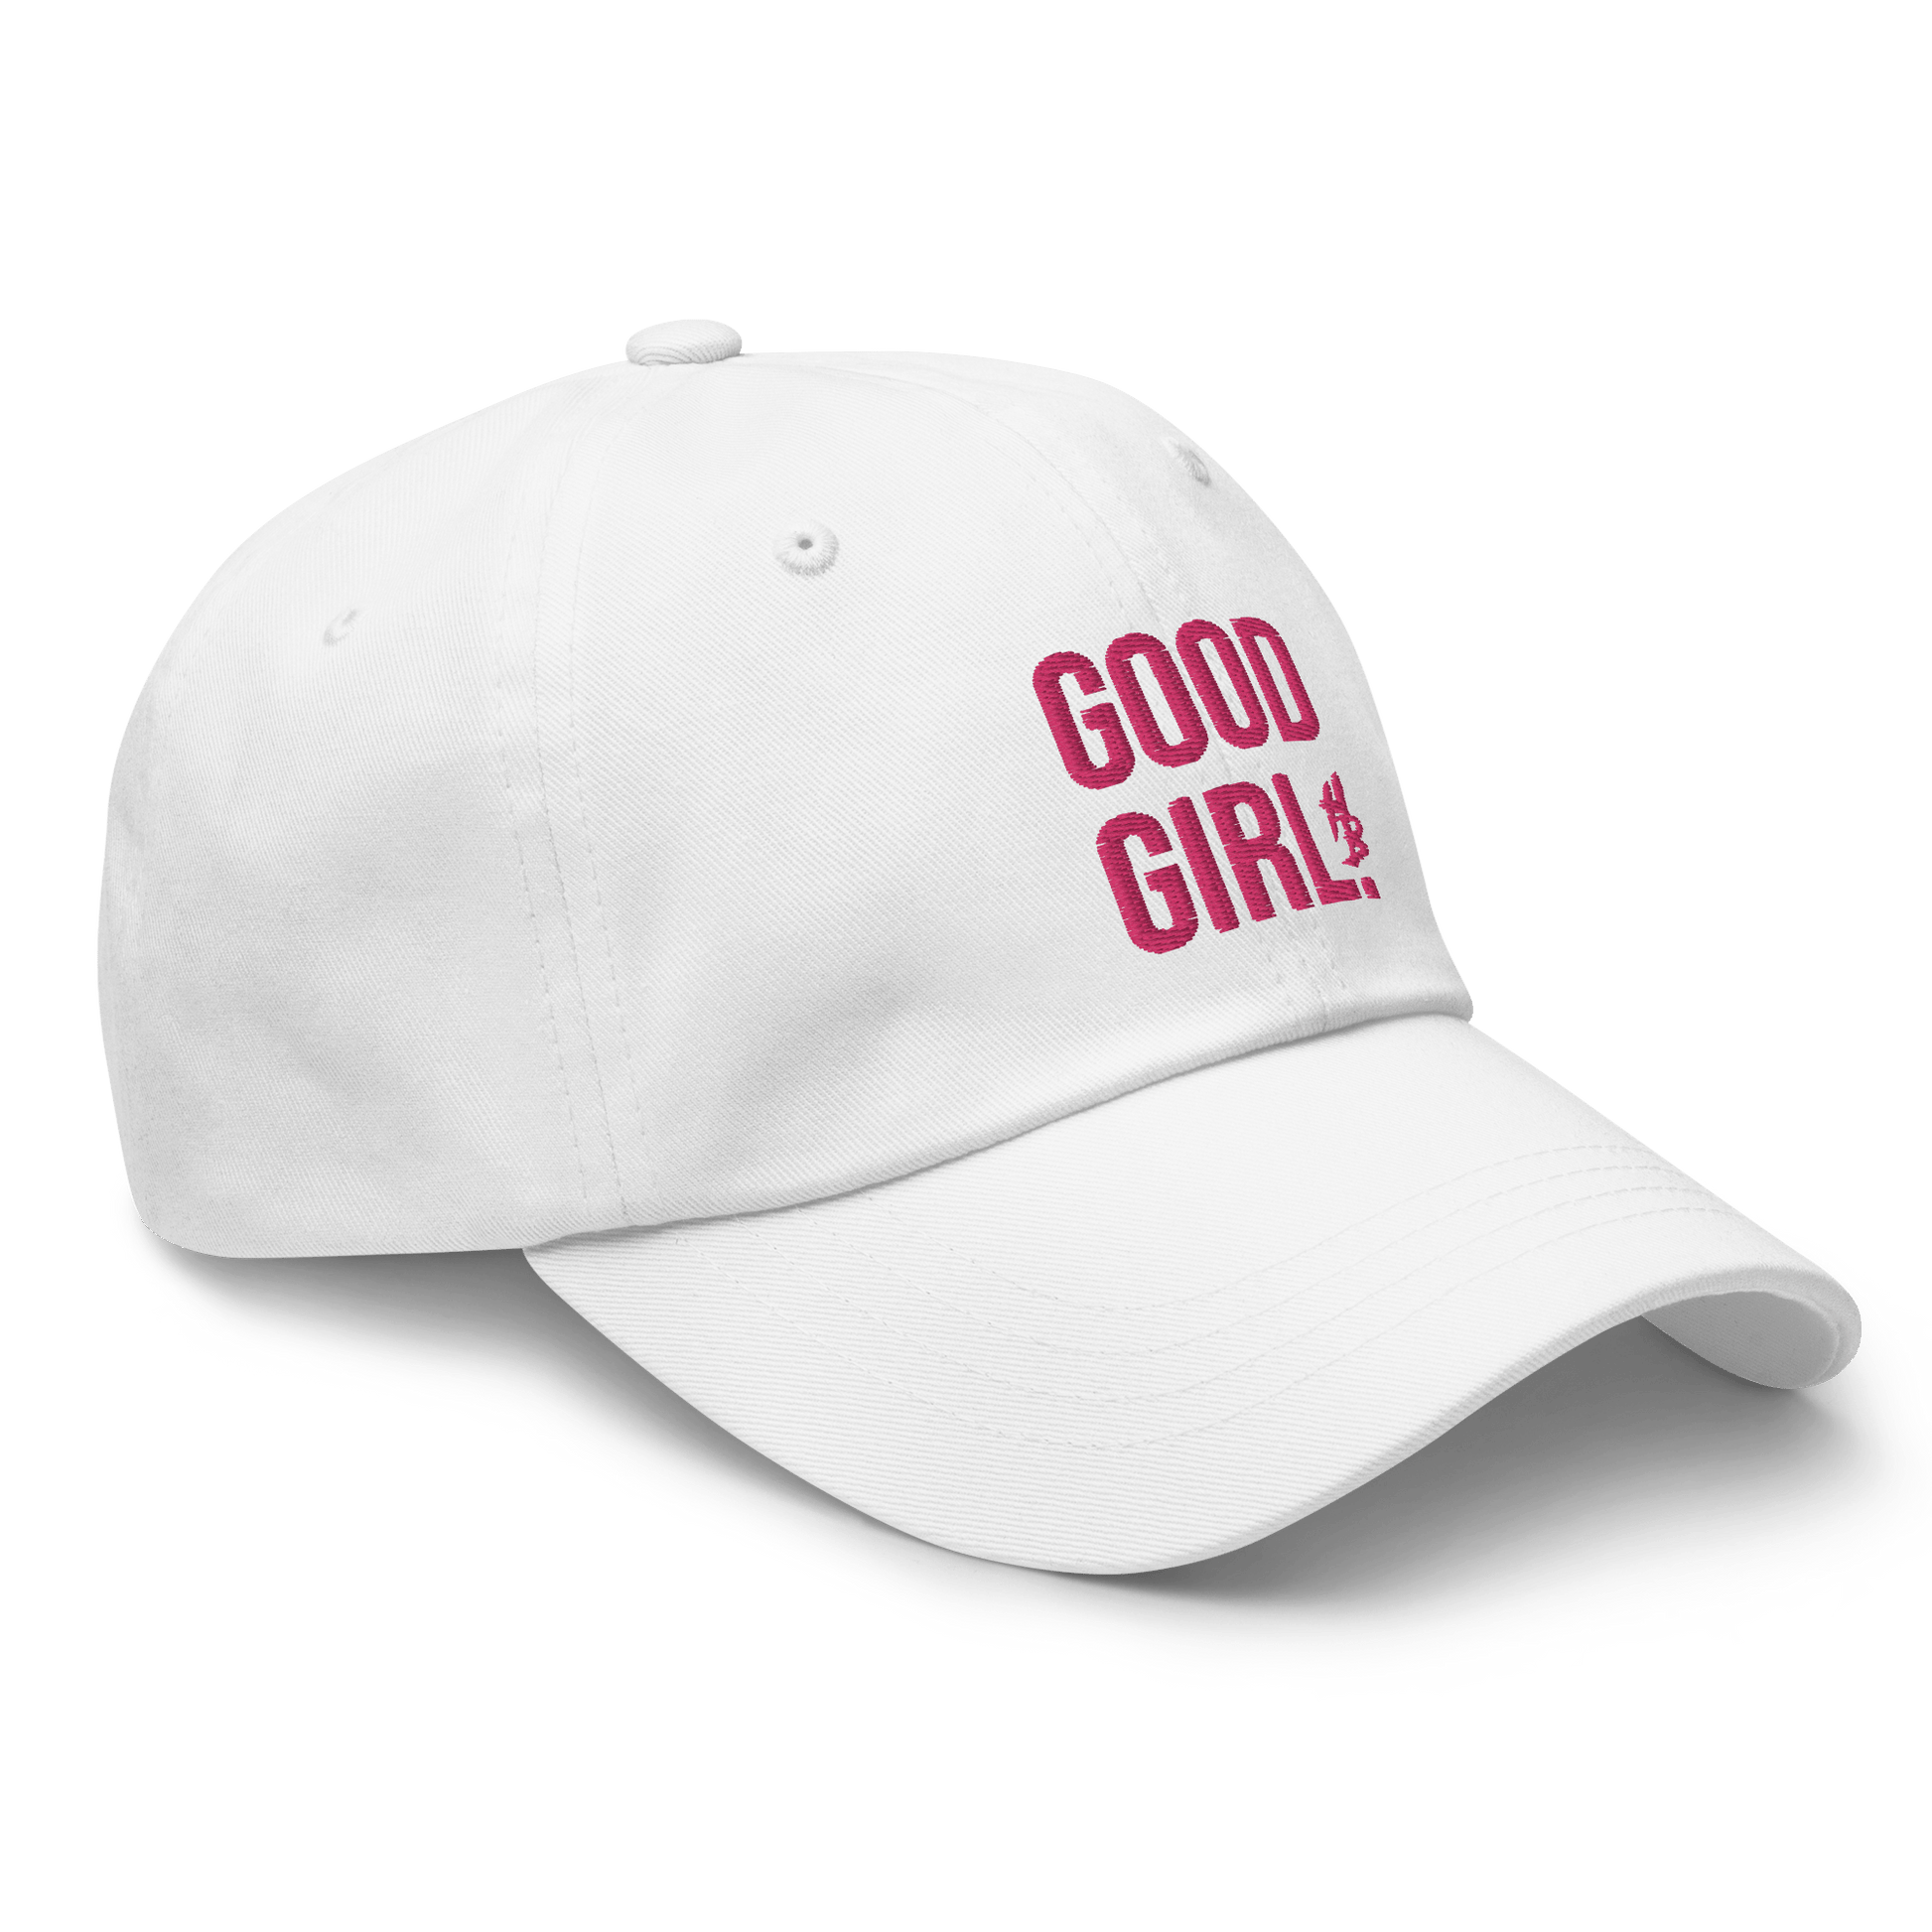 Good Girl Baseball Cap - Hoodlums & Brigands